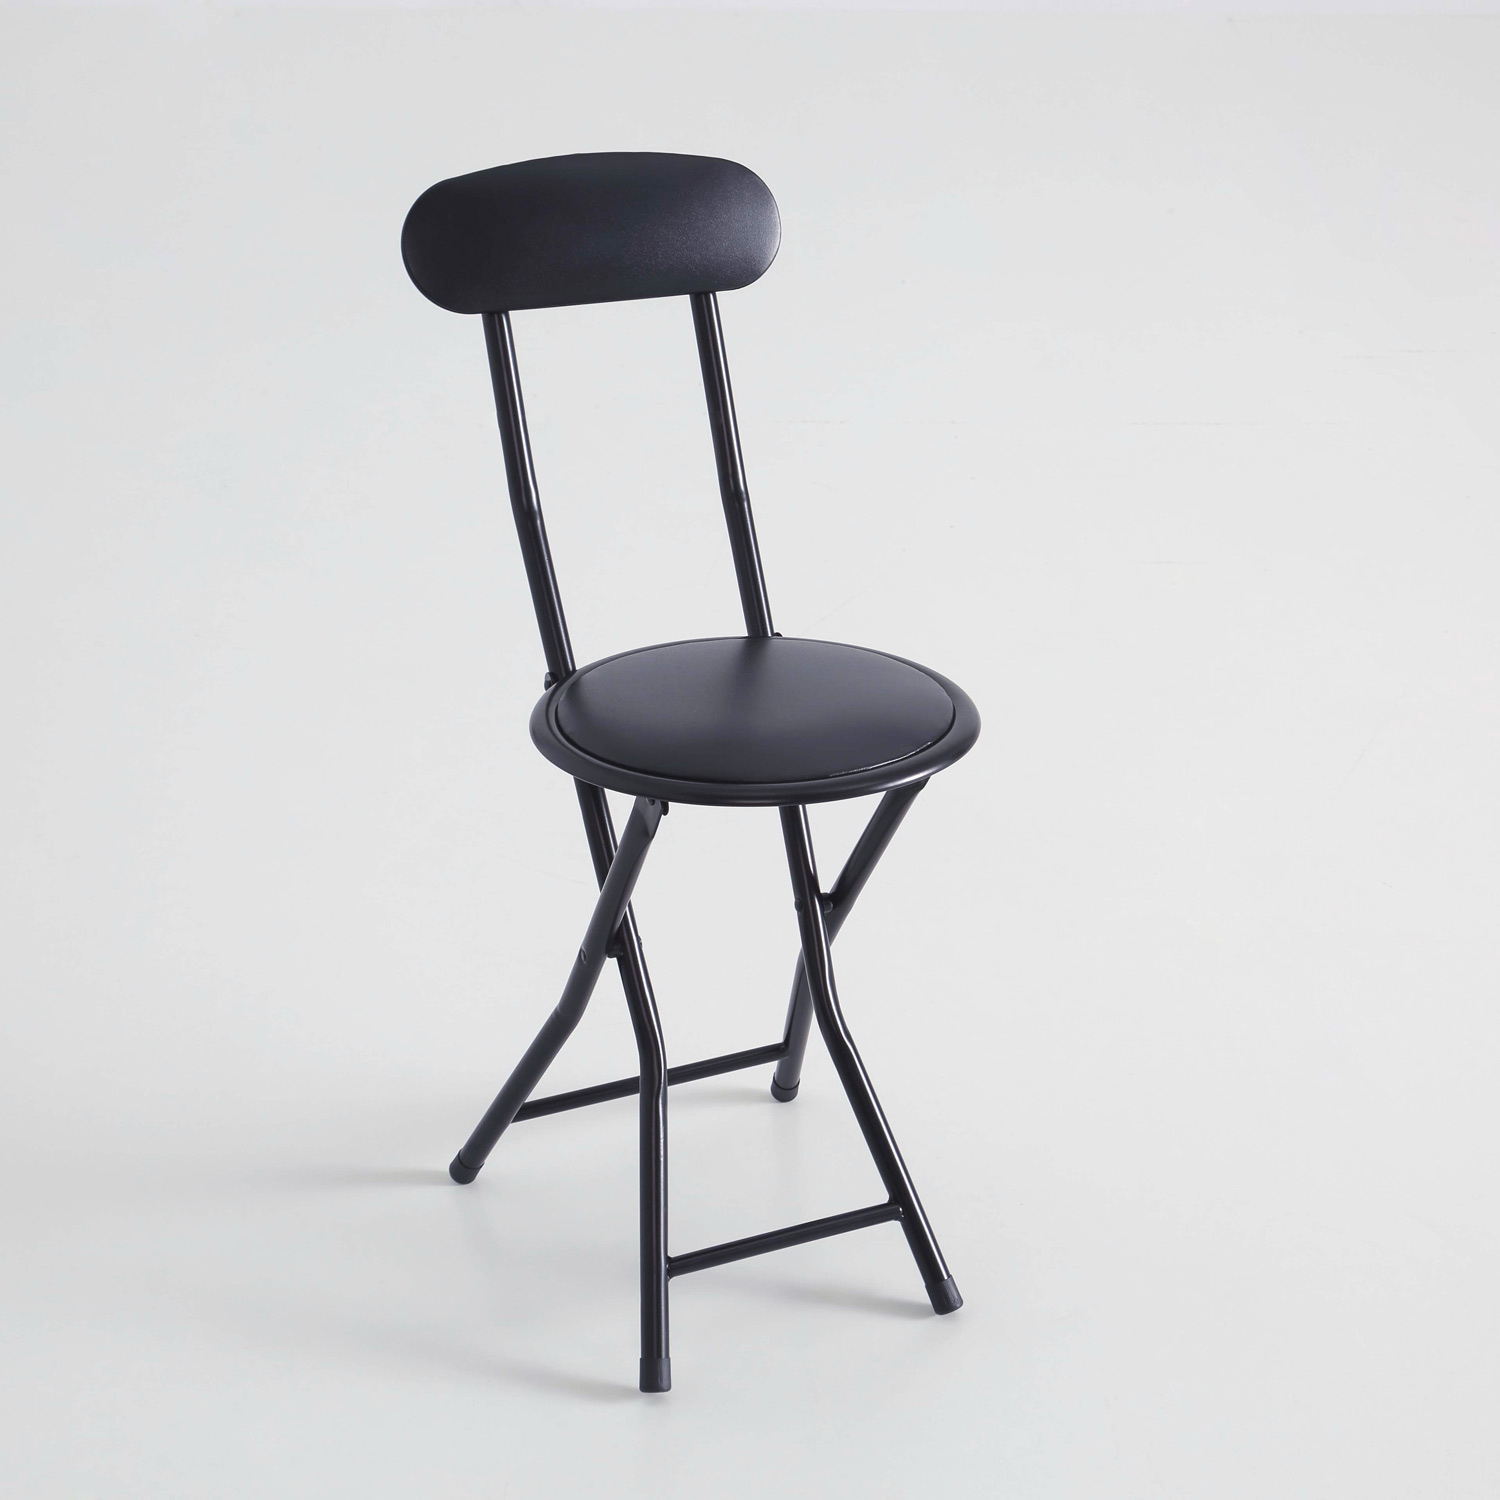 Taburete silla plegable blanca o negra | Muebles baratos online